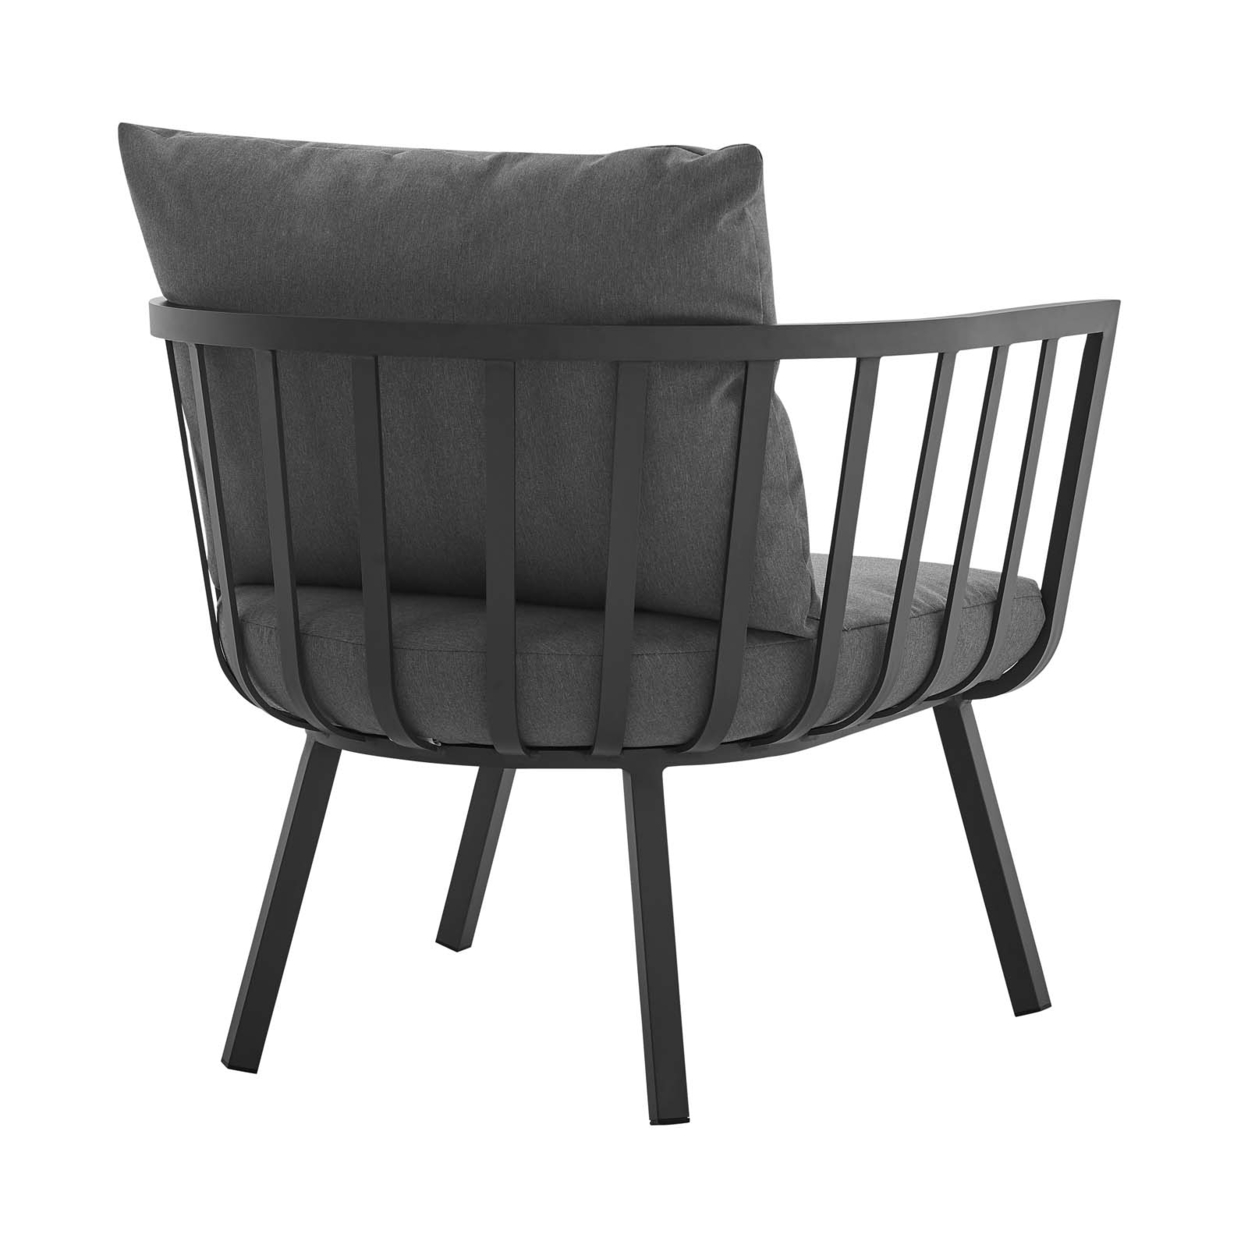 Riverside Outdoor Patio Aluminum Armchair,Gray Charcoal